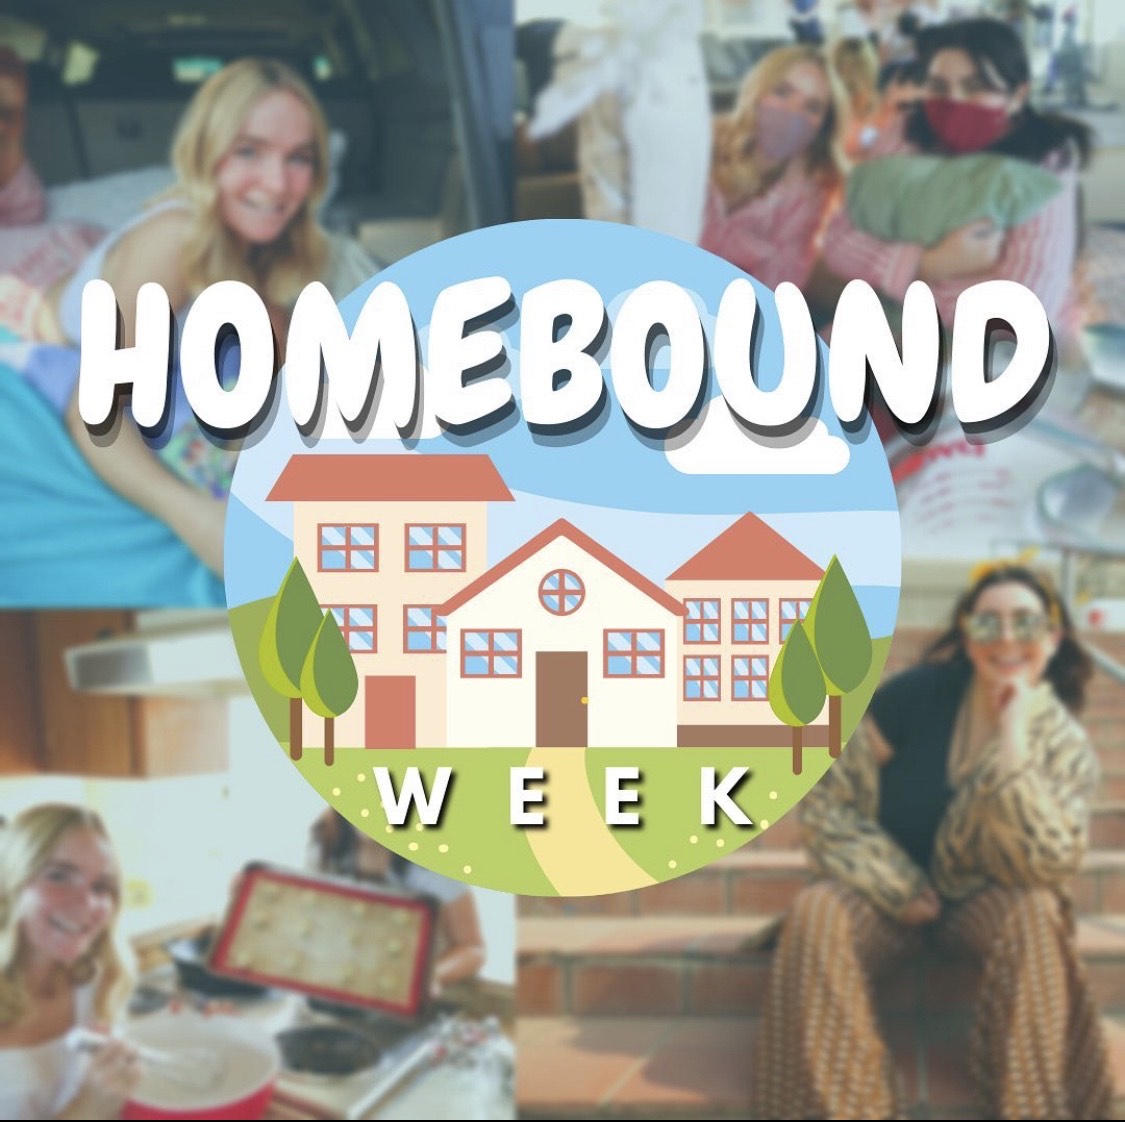 SLOHS+ASB+Hosts+Homebound+Week+this+week+instead+of+traditional+Homecoming+Week